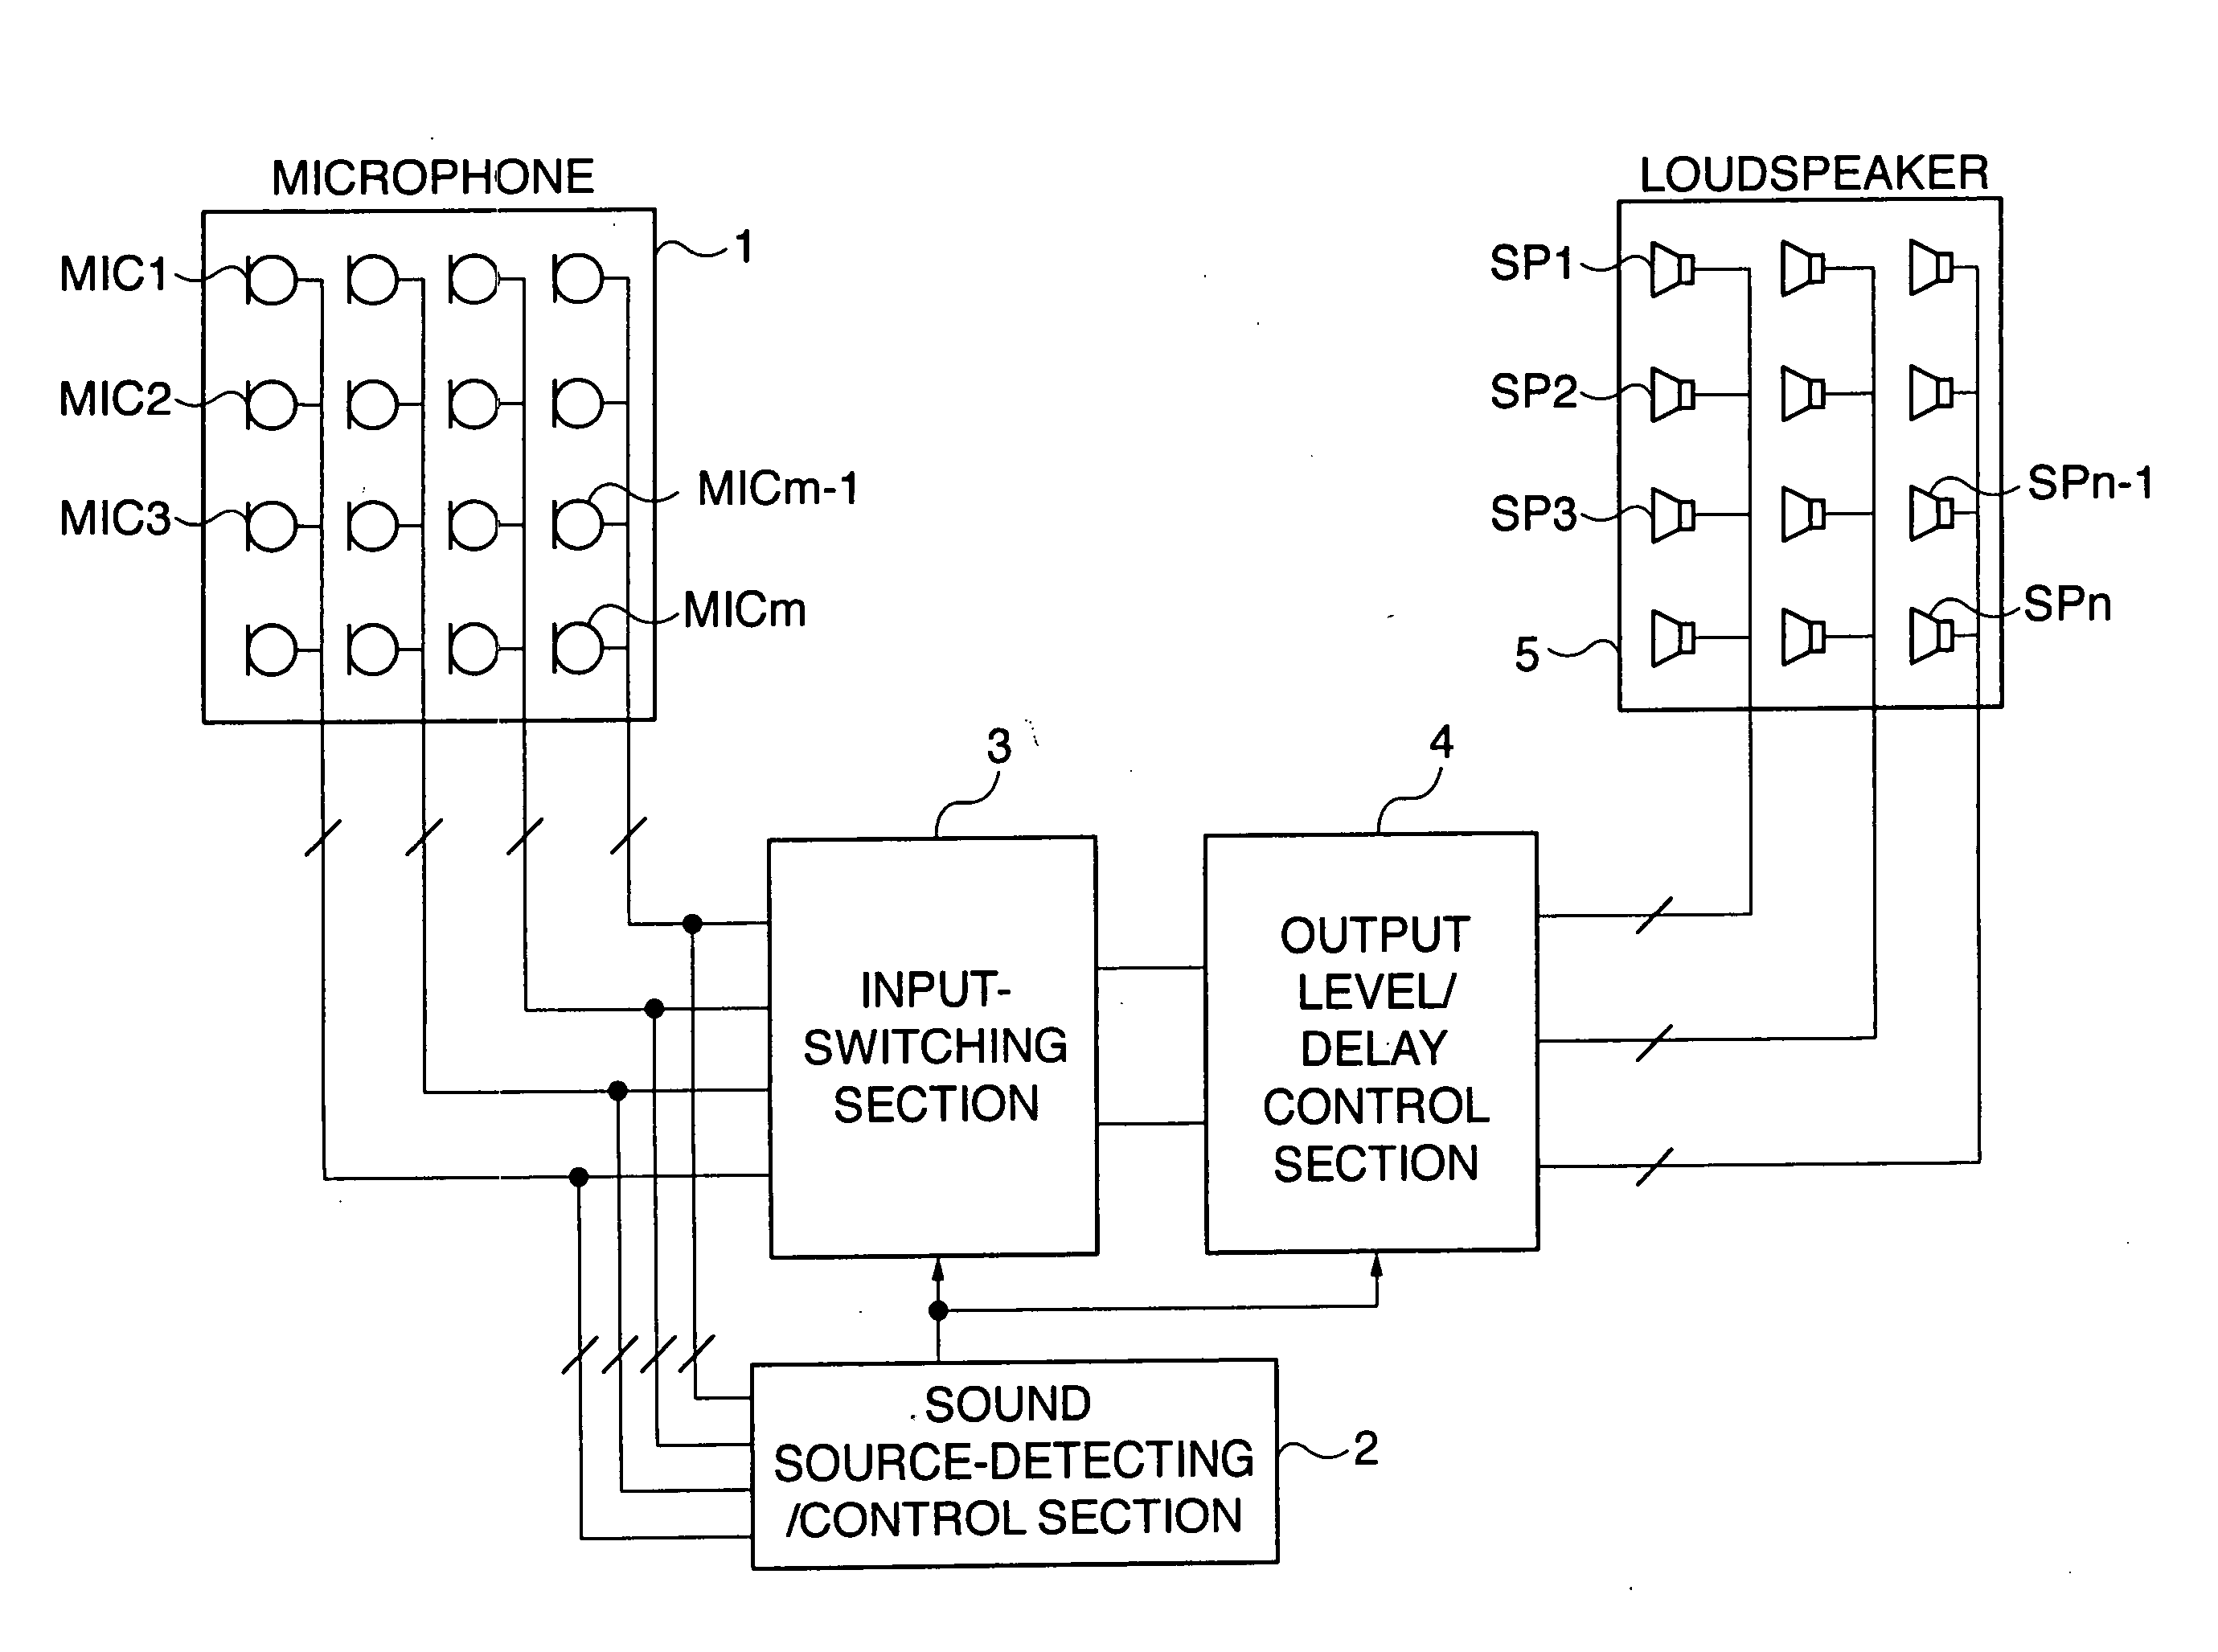 Loudspeaker system